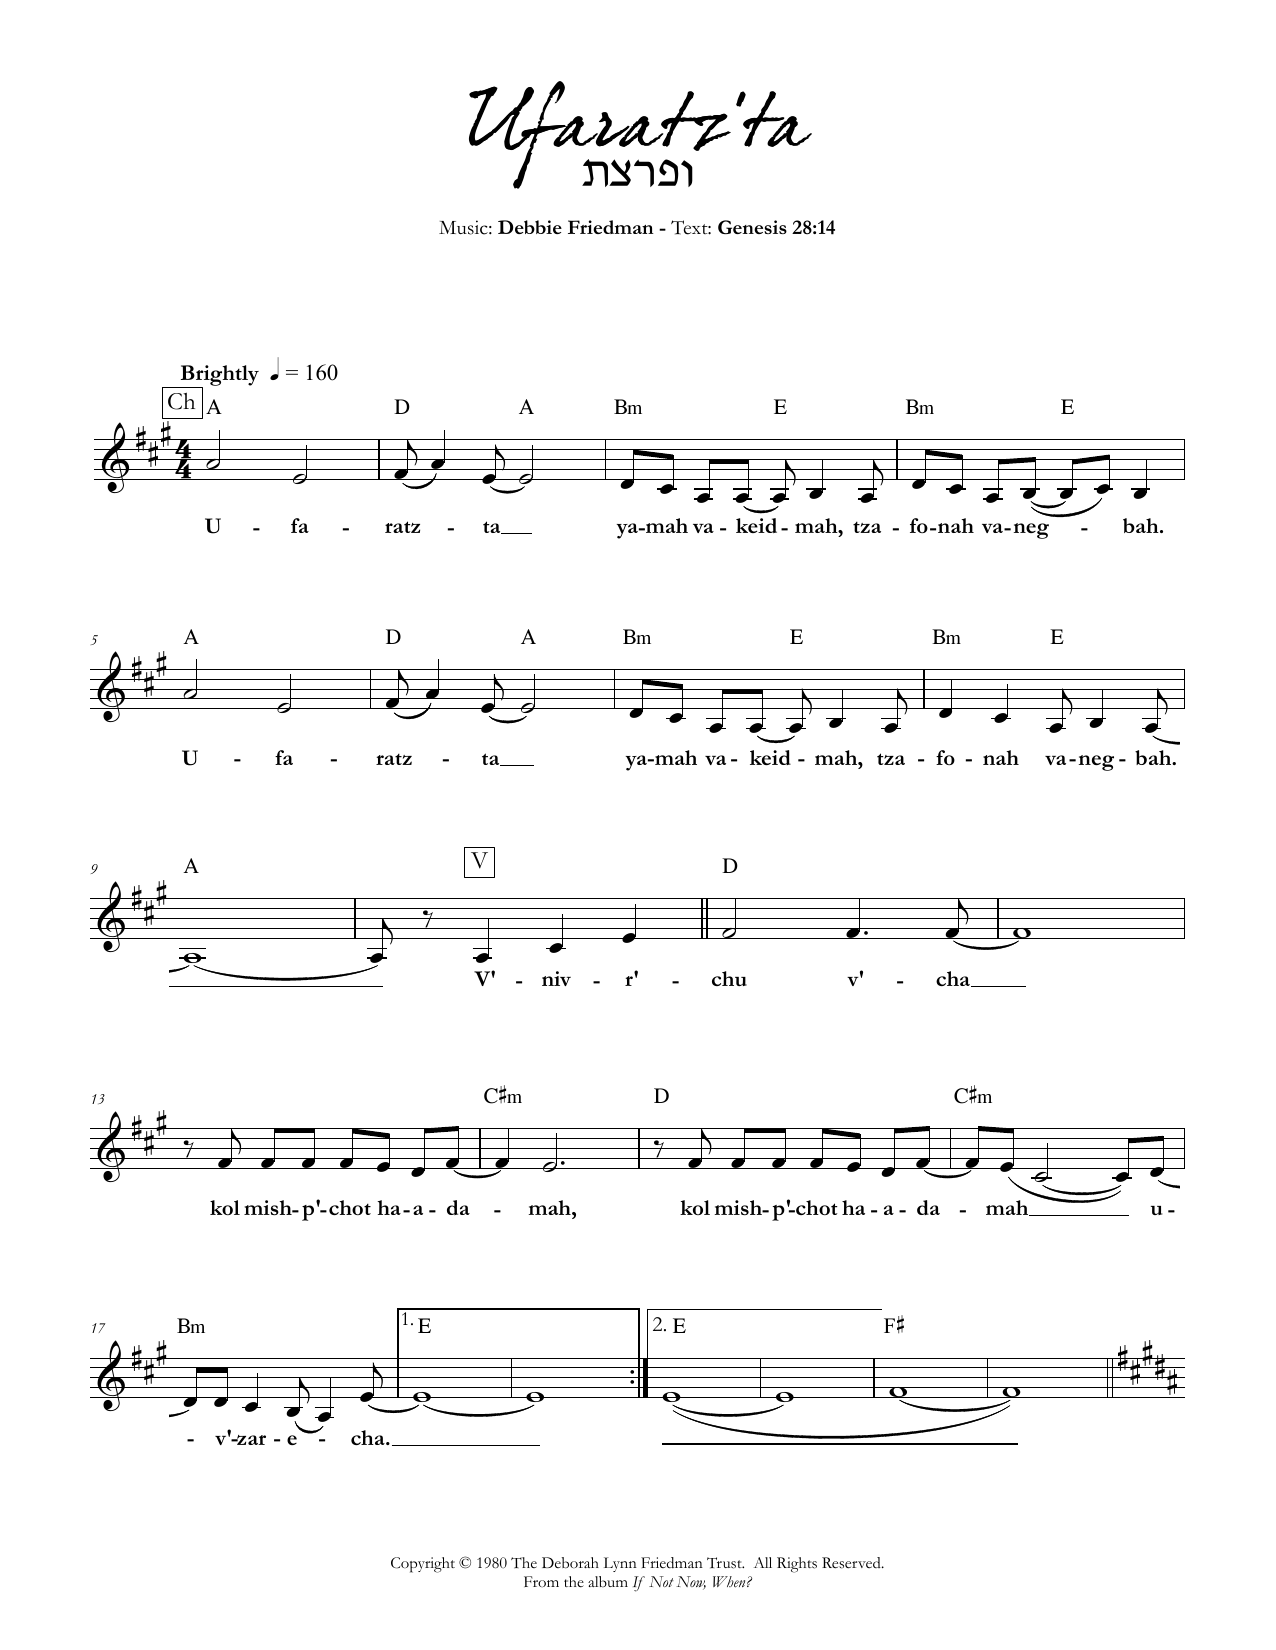 Debbie Friedman Ufaratz'ta Sheet Music Notes & Chords for Lead Sheet / Fake Book - Download or Print PDF